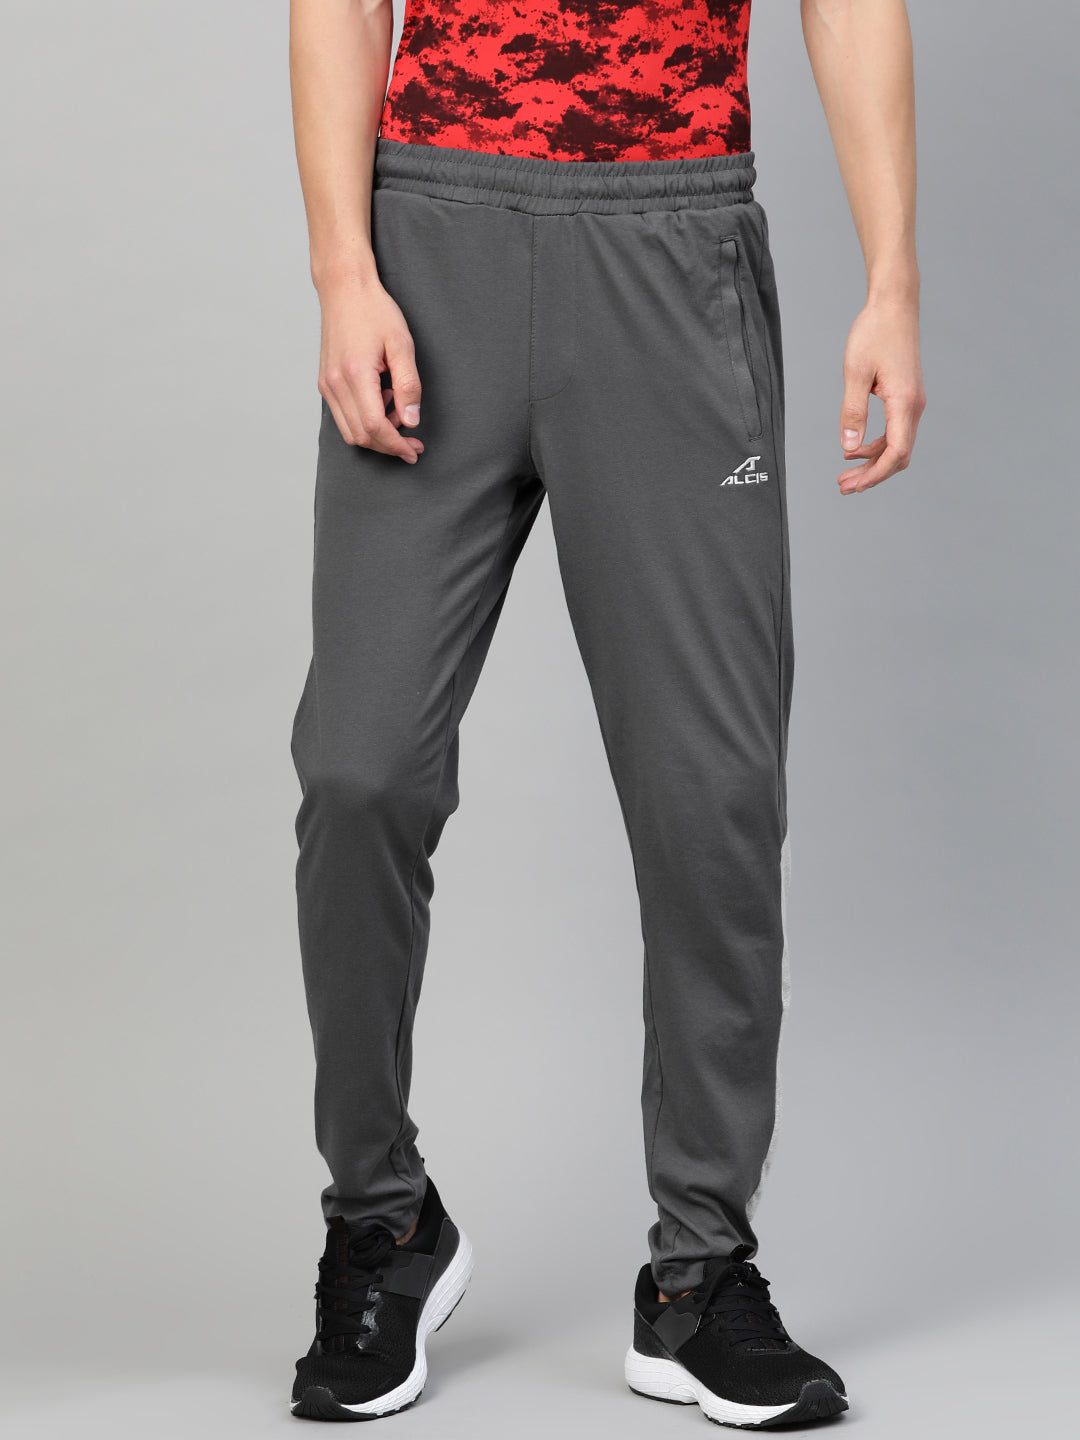 Alcis Men Charcoal Grey Slim Fit Solid Track Pants